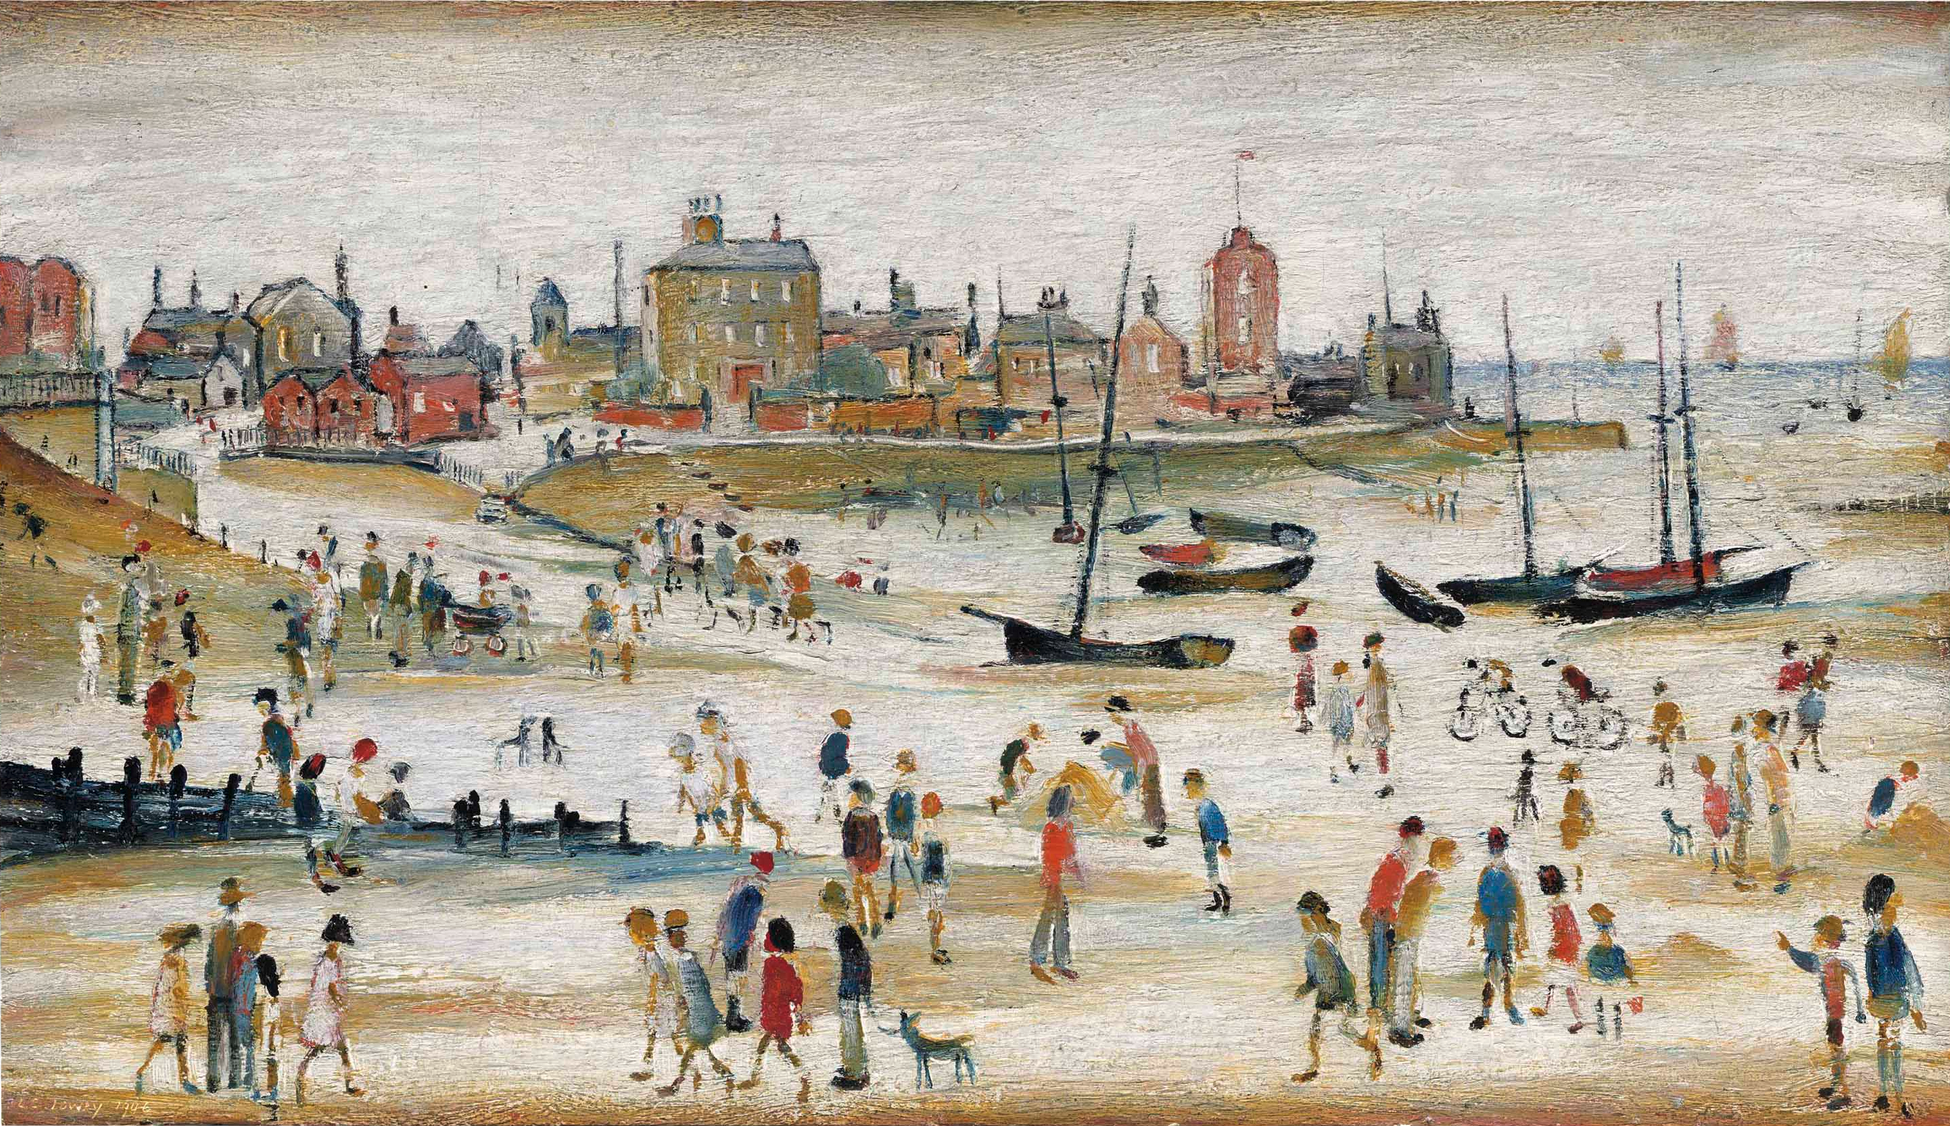 Beach Scene (1946) by Laurence Stephen Lowry (1887 - 1976), English artist.